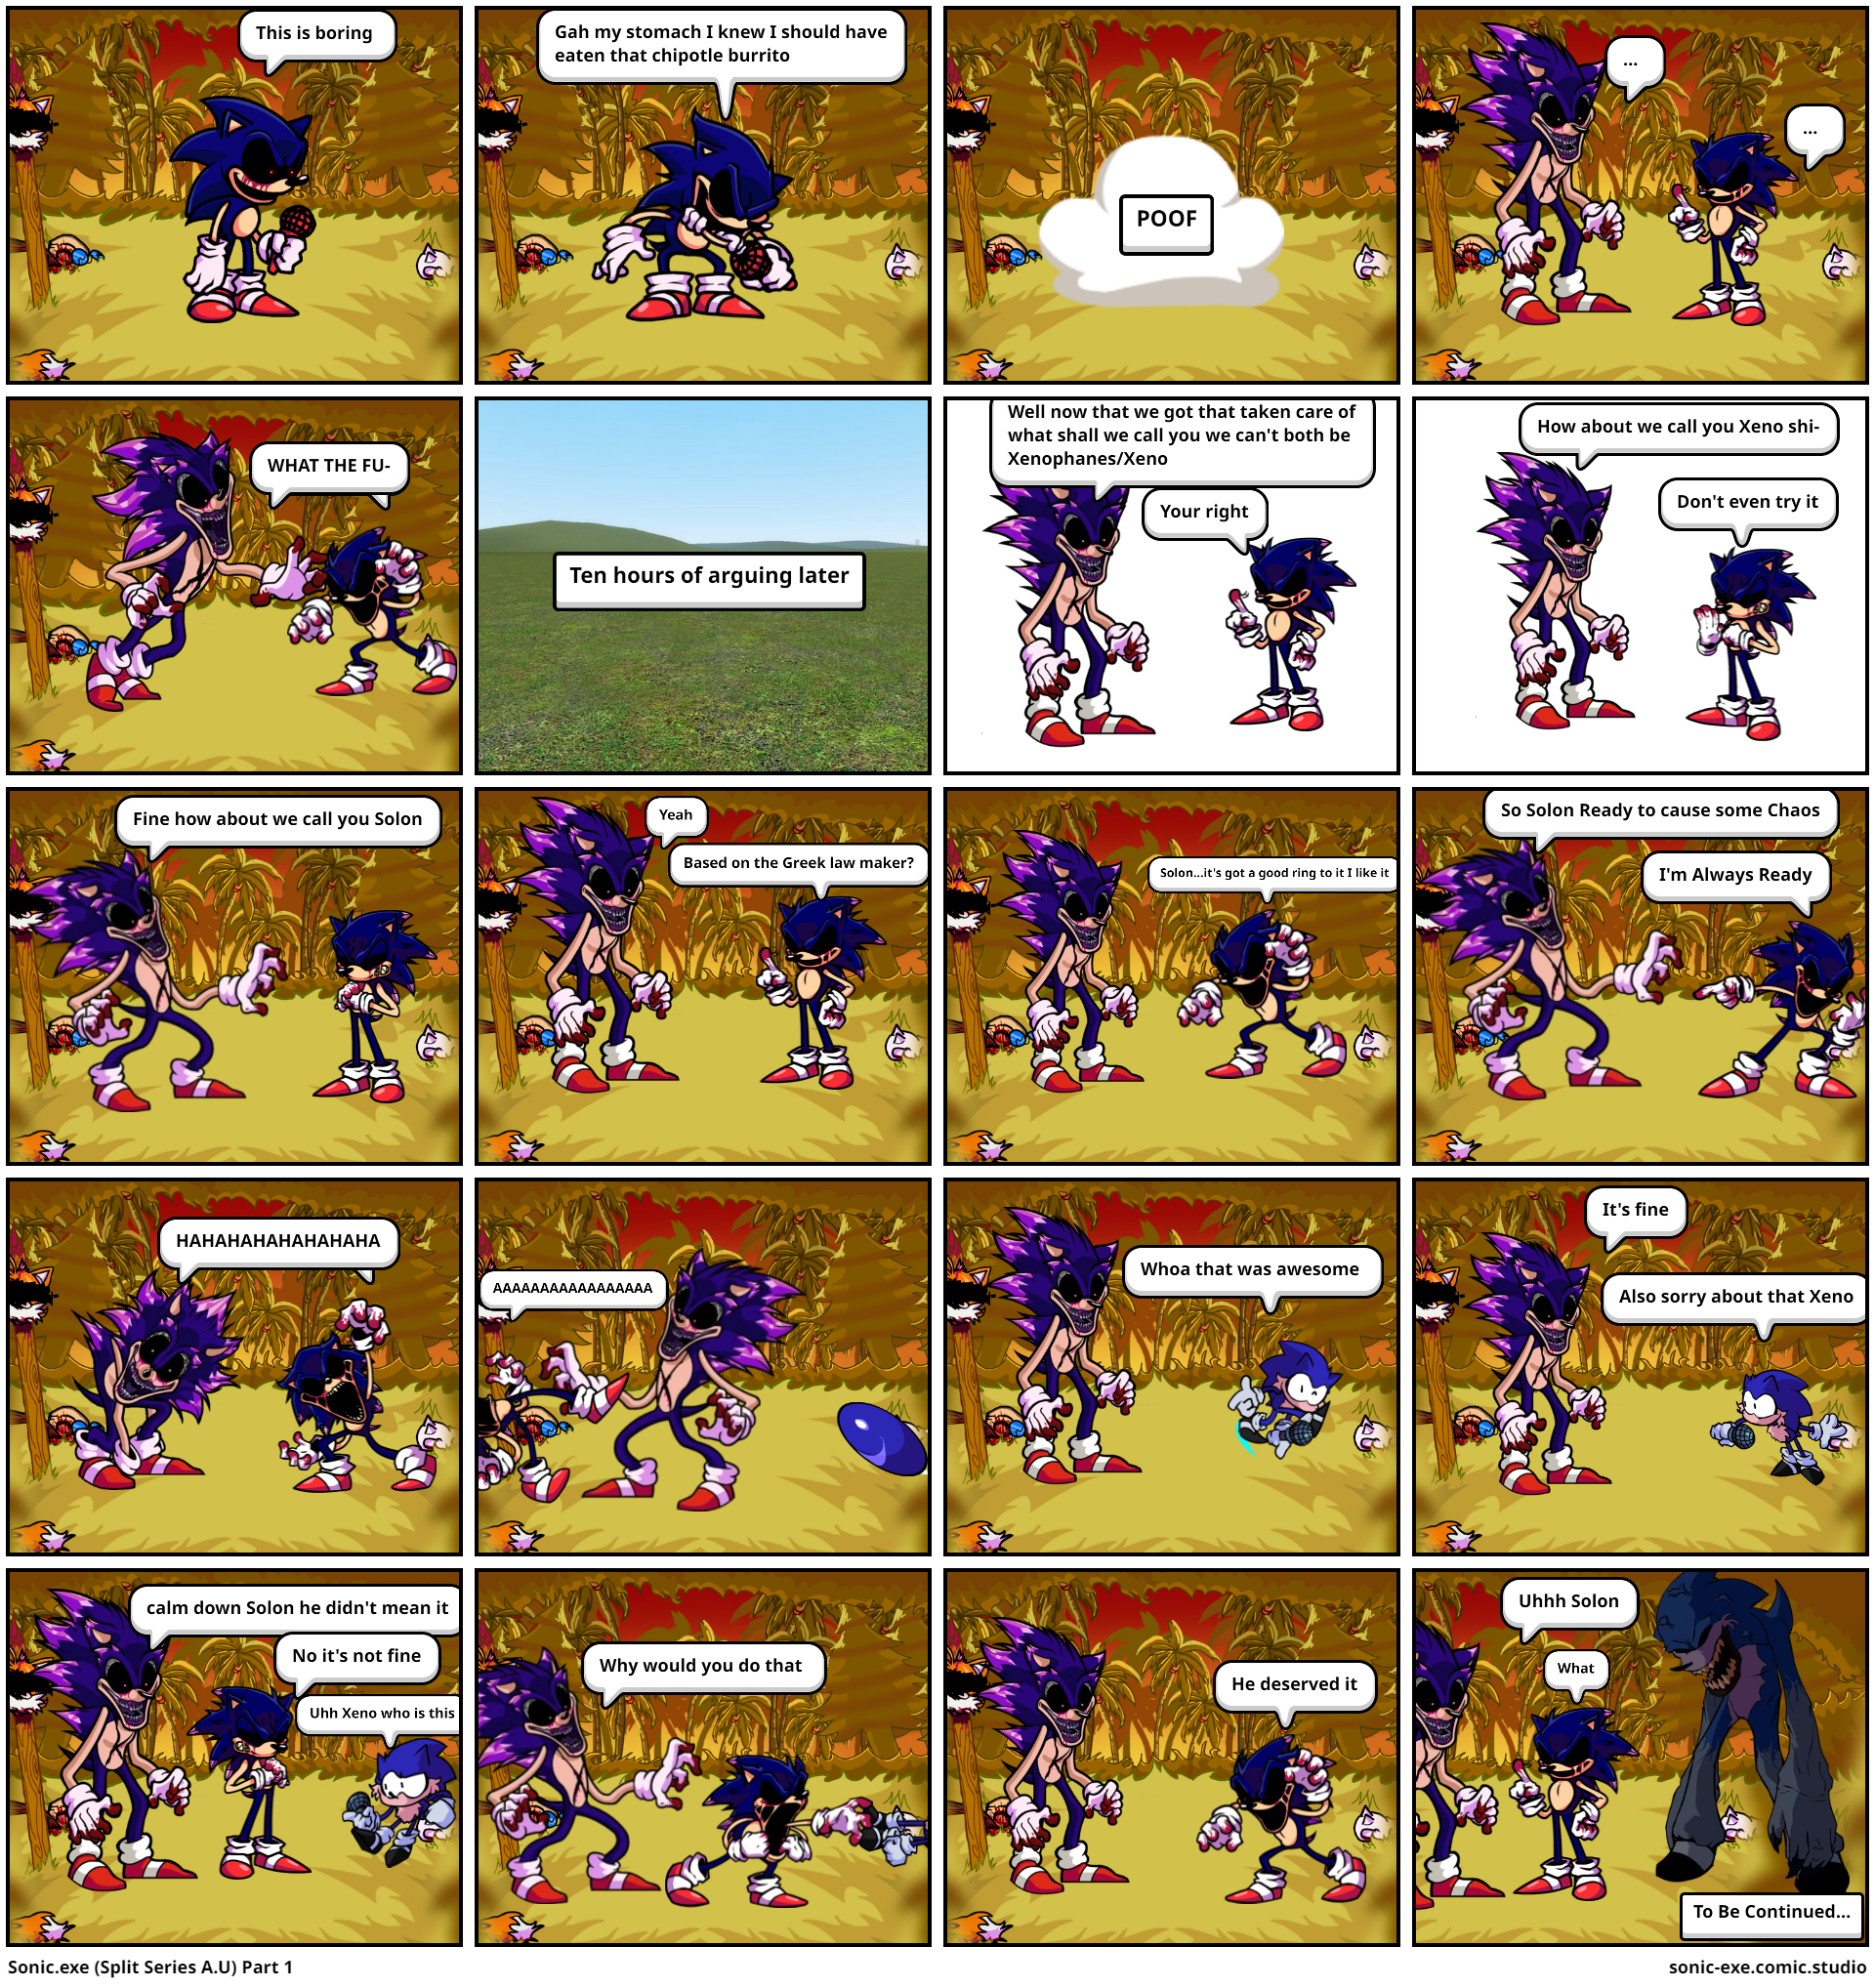 Sonic.exe (Split Series A.U) Part 1